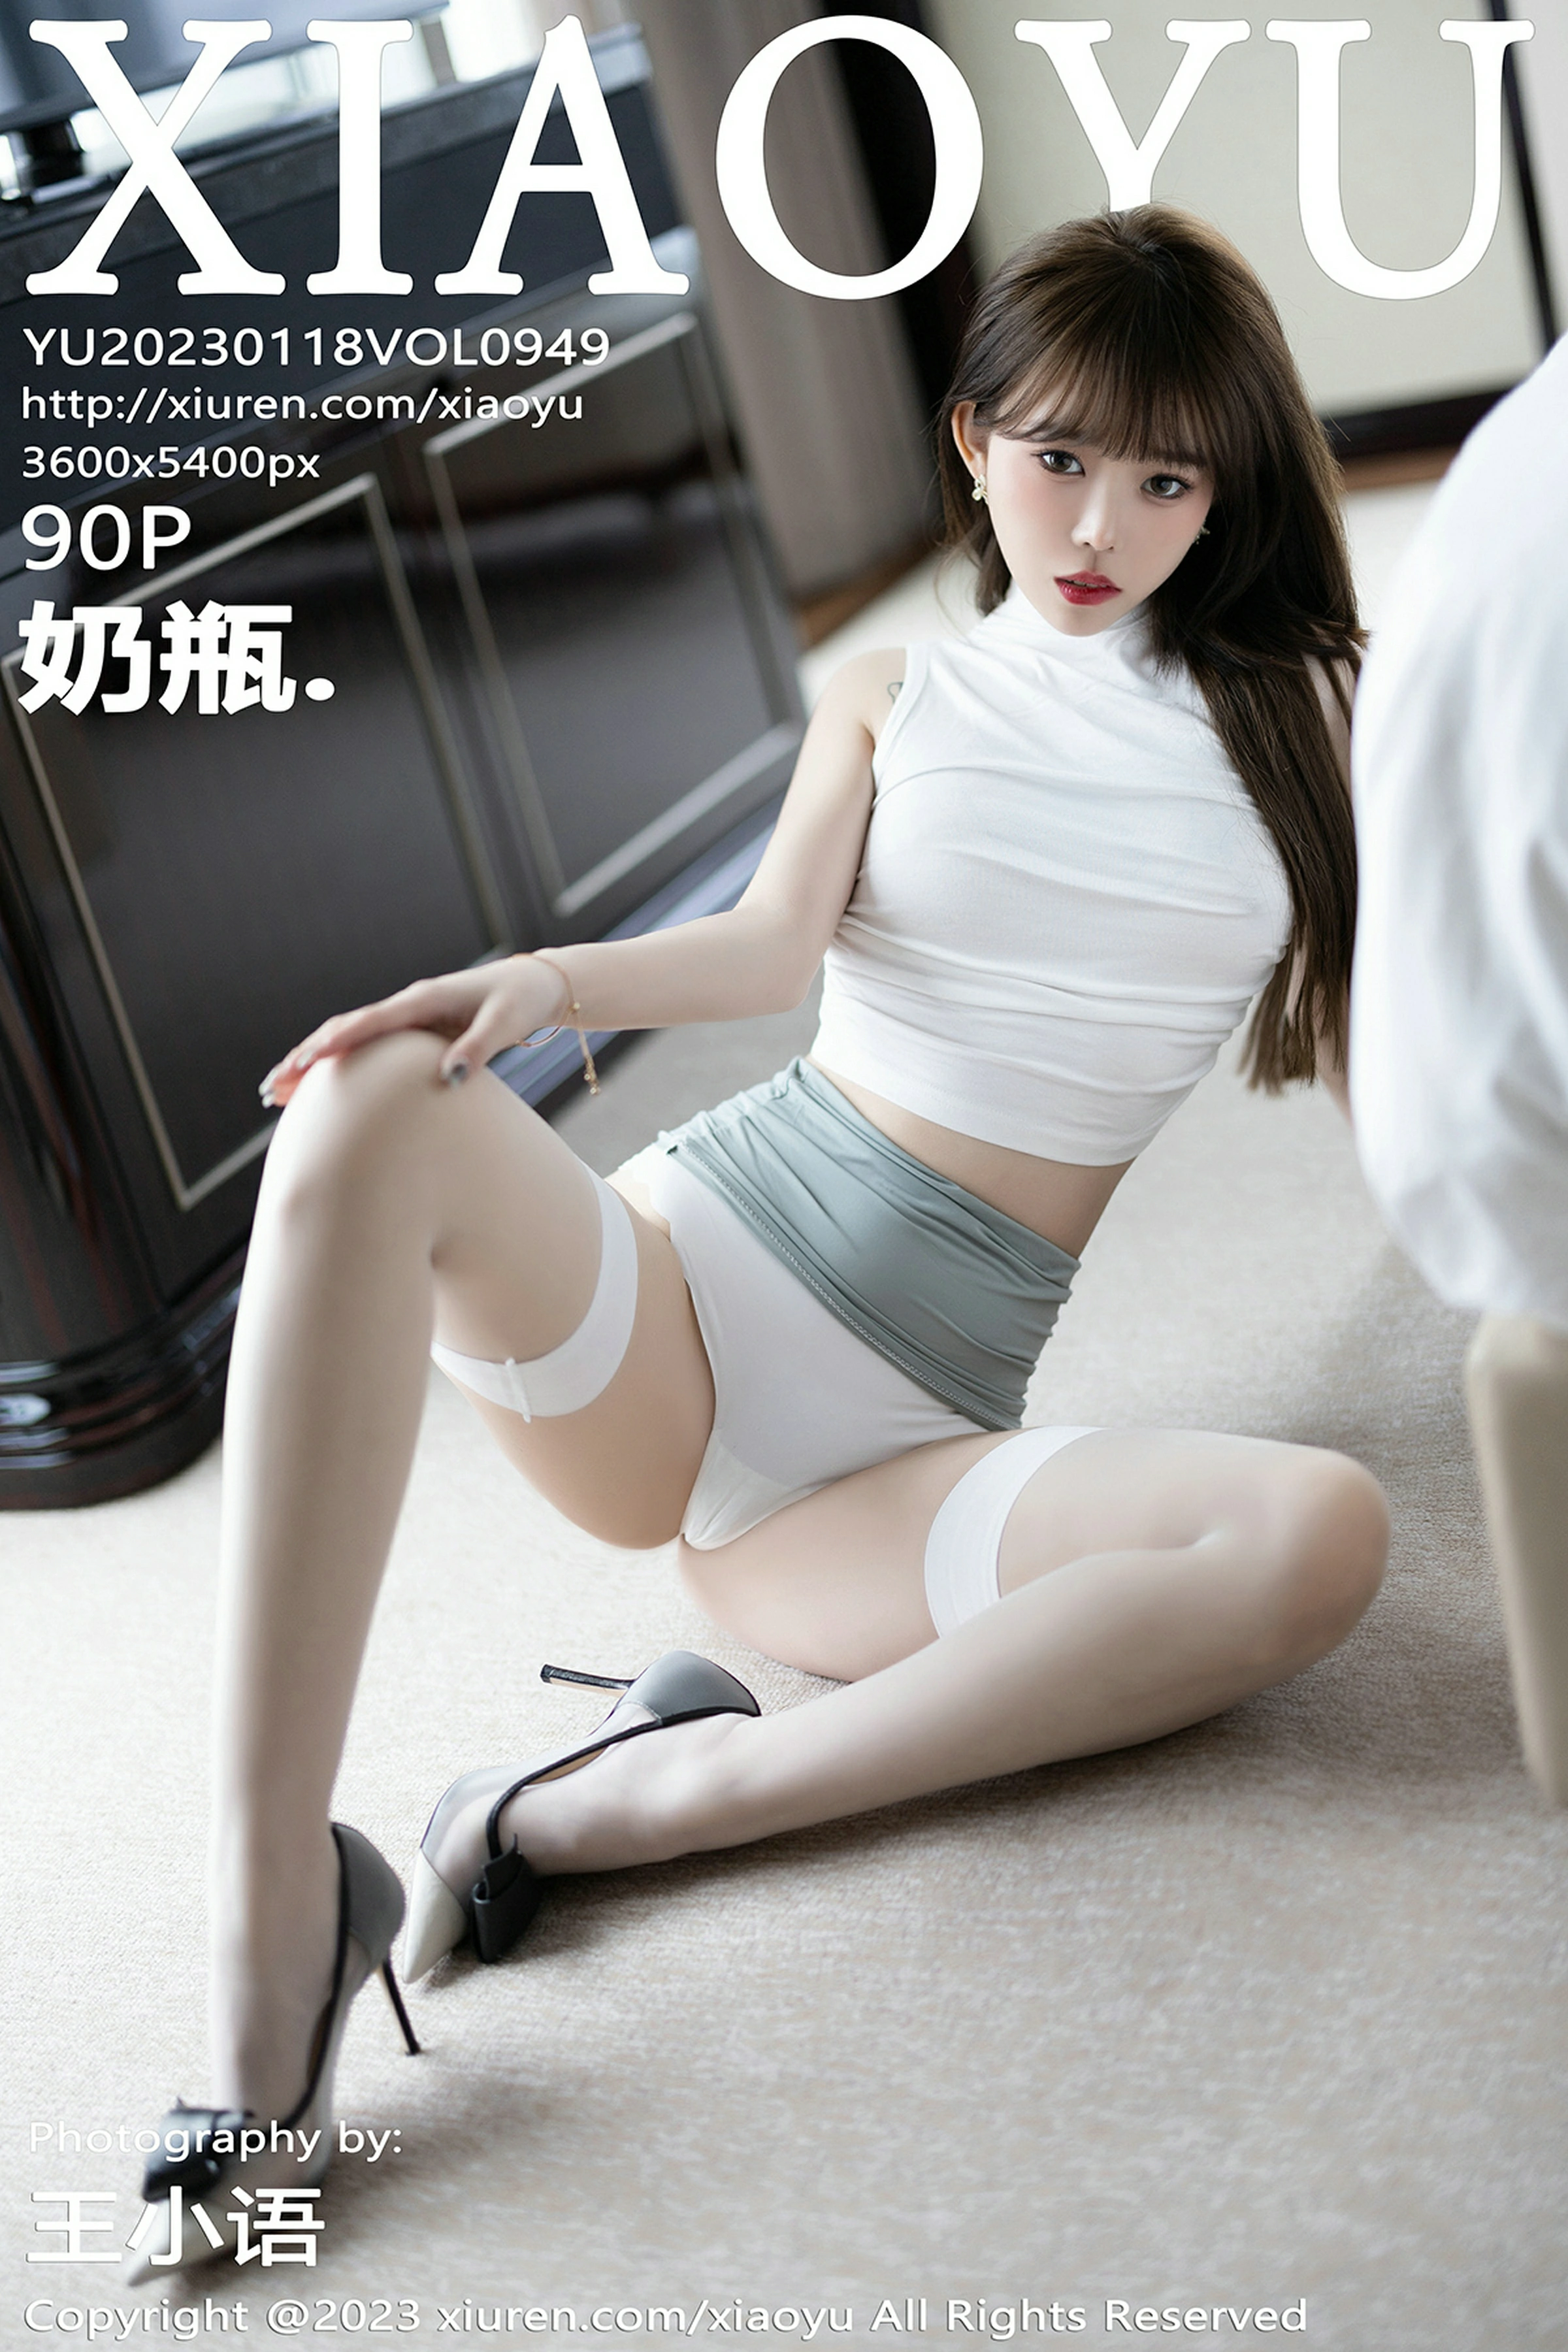 [XIAOYU语画界]YU20230118VOL0949 奶瓶 淡蓝色短裙加白色丝袜美腿性感写真集,cover